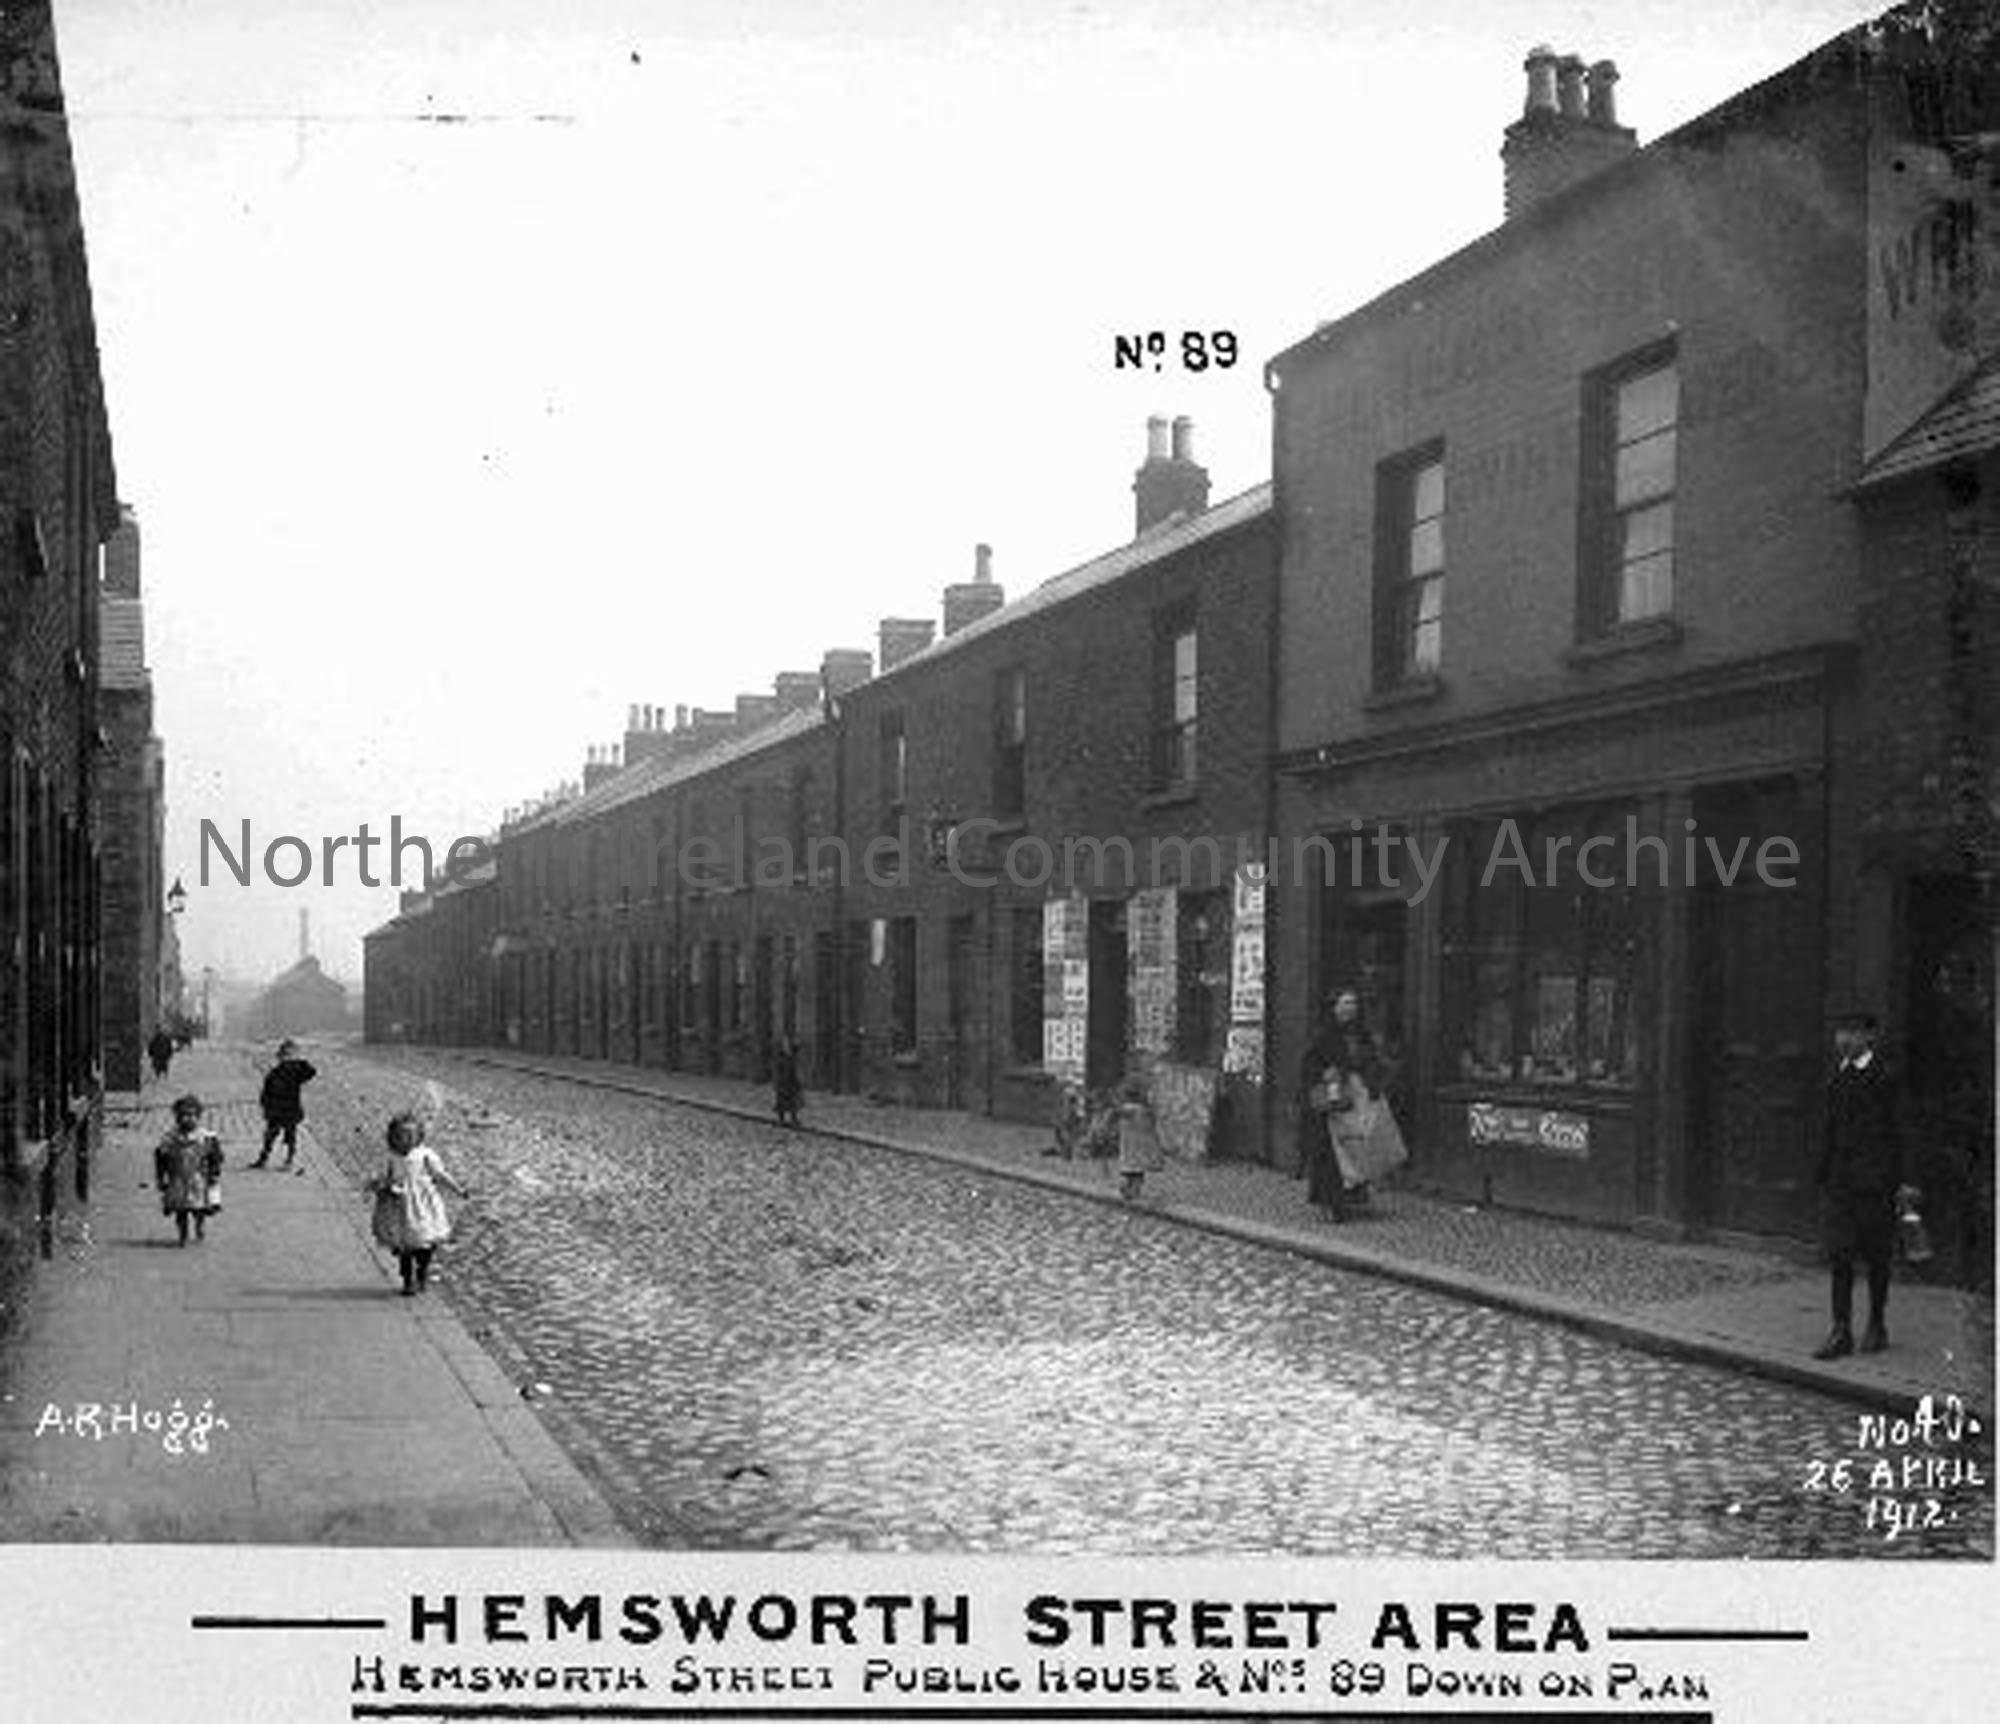 Hemsworth Street Area – Hemsworth Street Public House (1615)